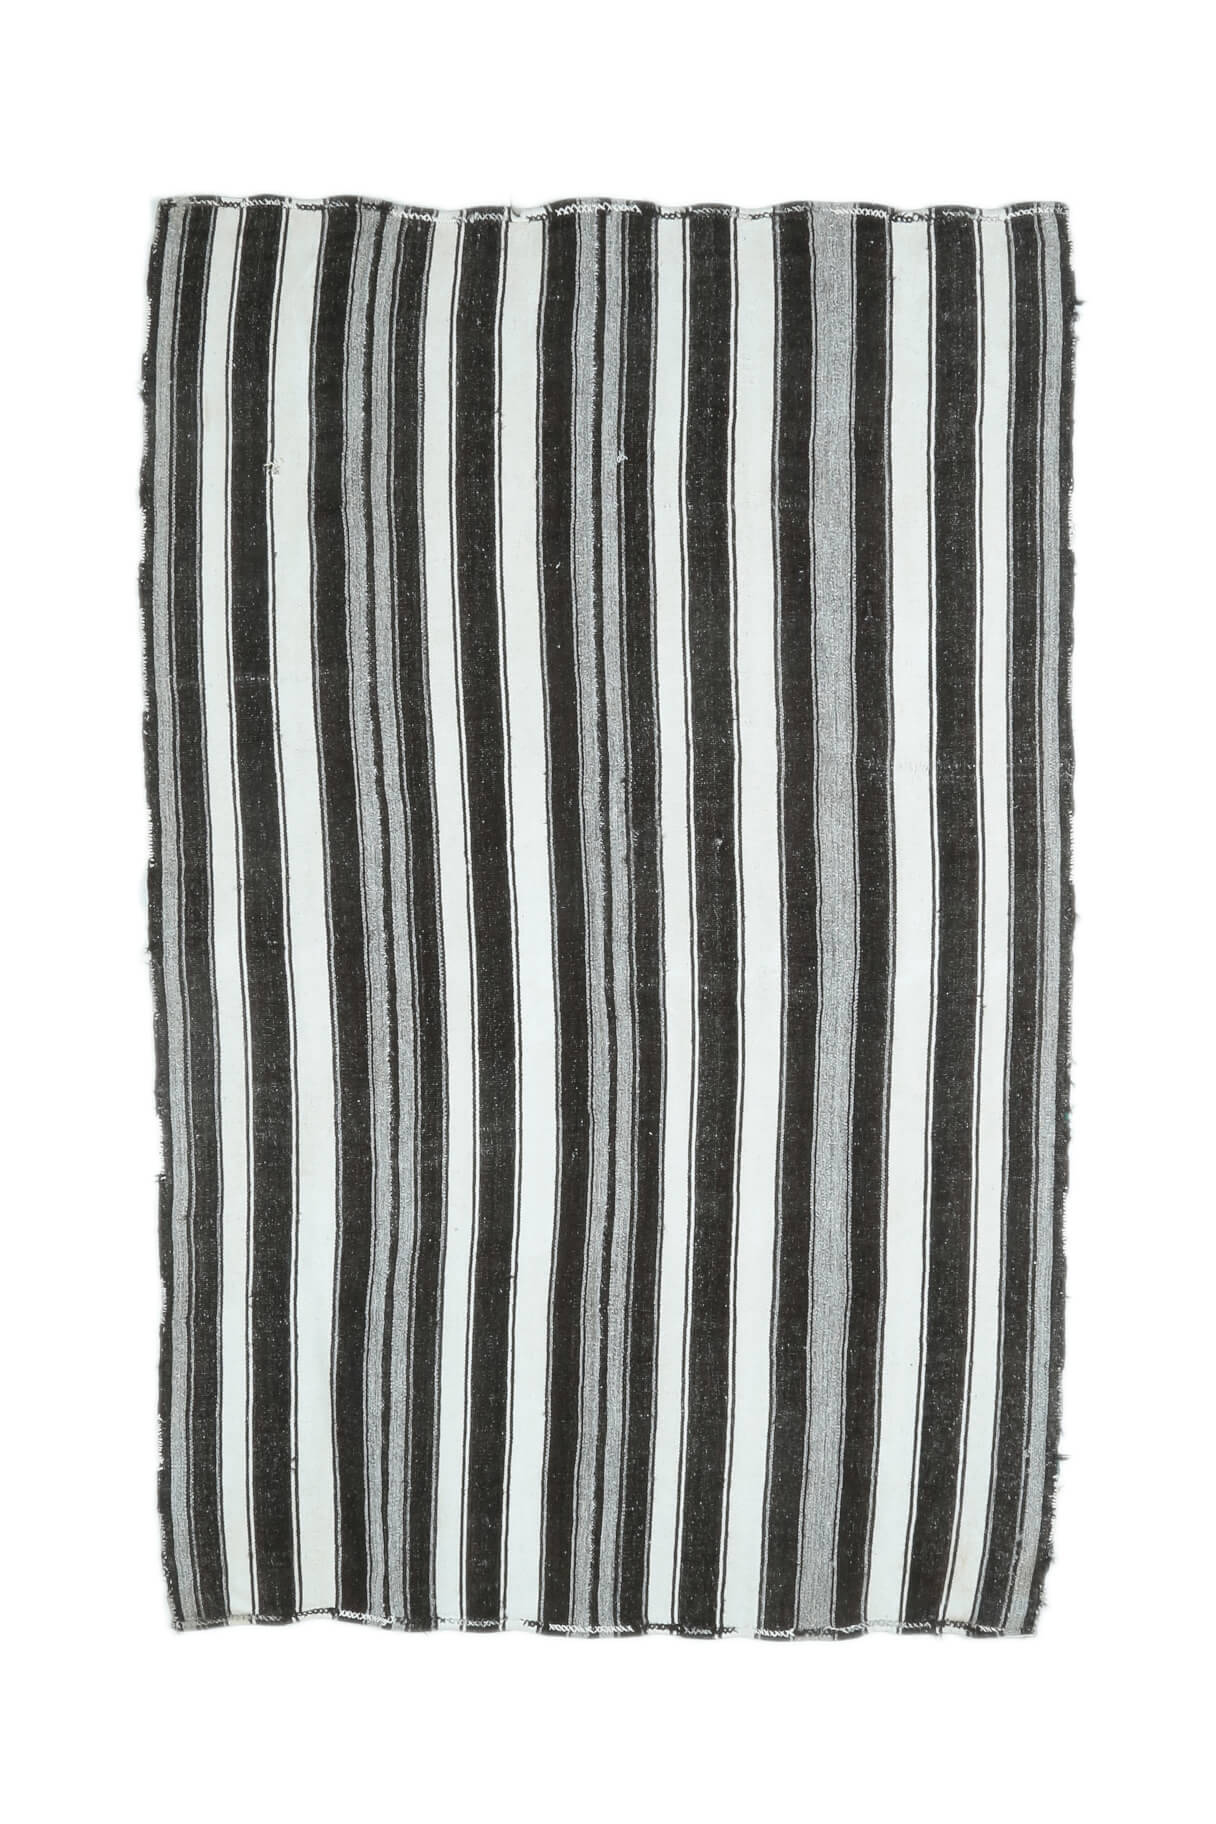 Hattie - Black & White Striped Jute Kilim - Thumbnail